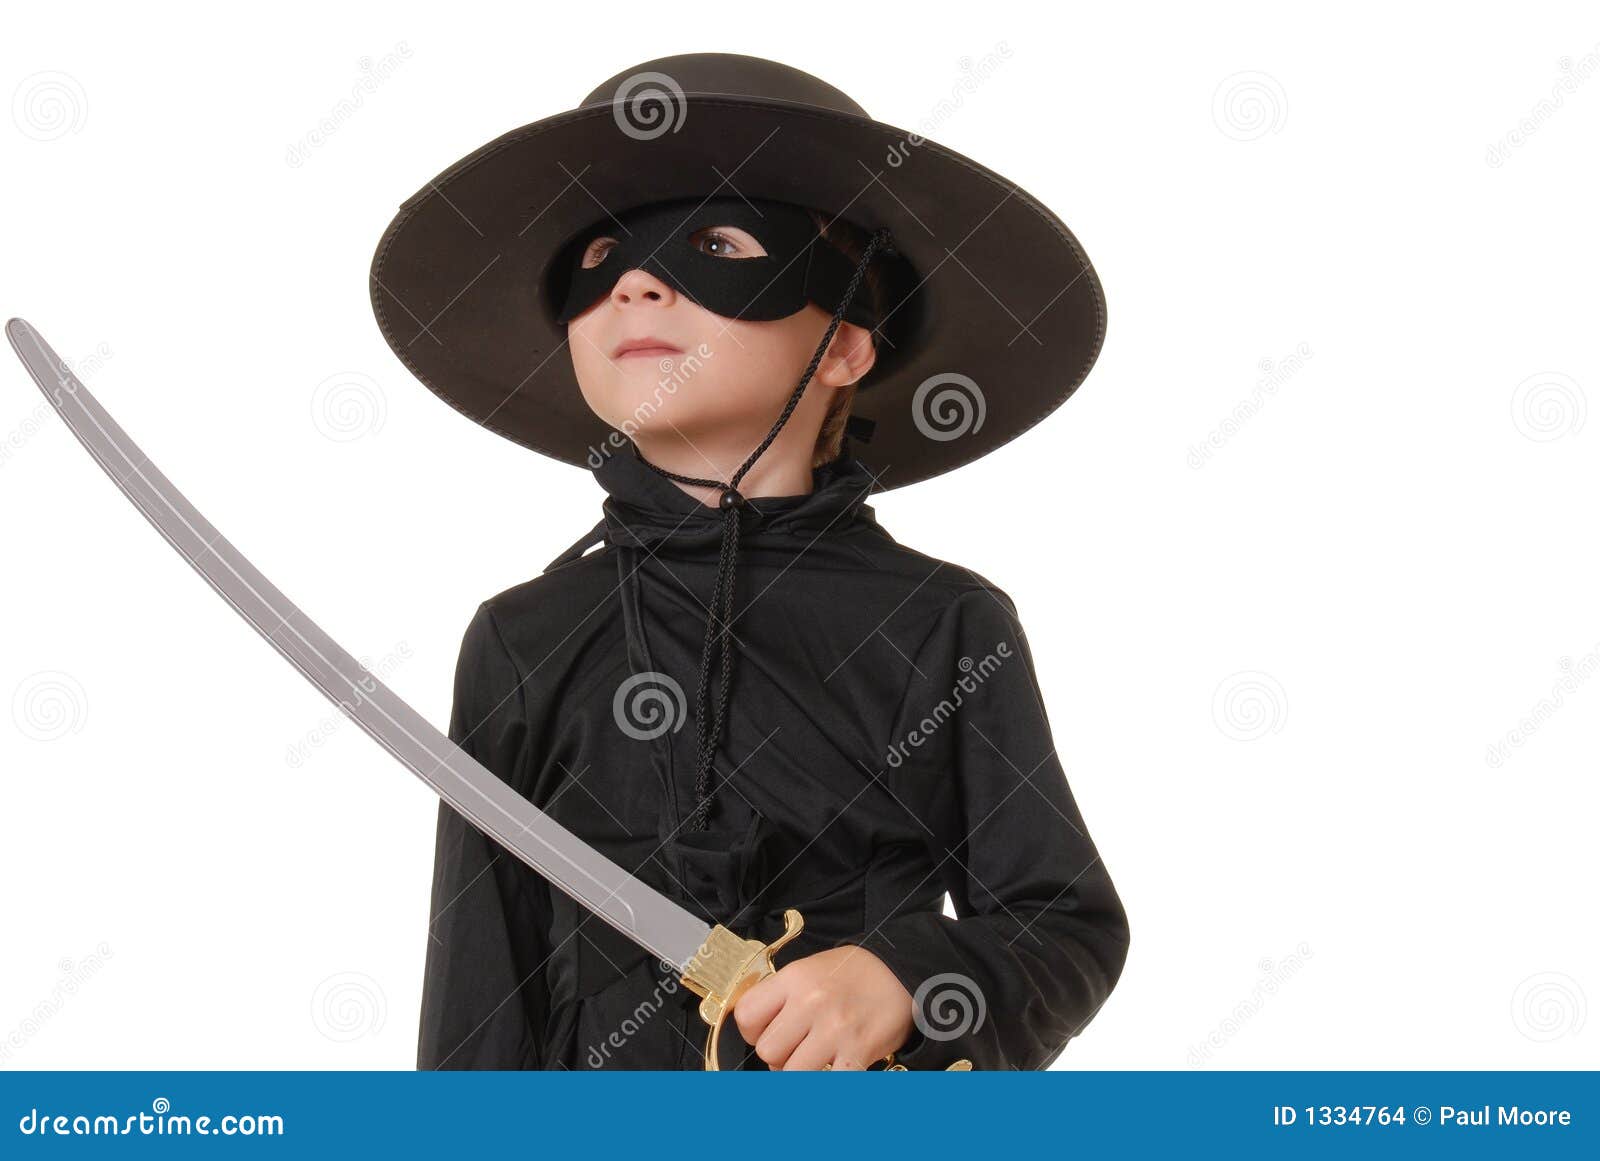 luyaoyao Kids Bandit Zorro Spanish Halloween Costumes Bolero Felt Party Hats 